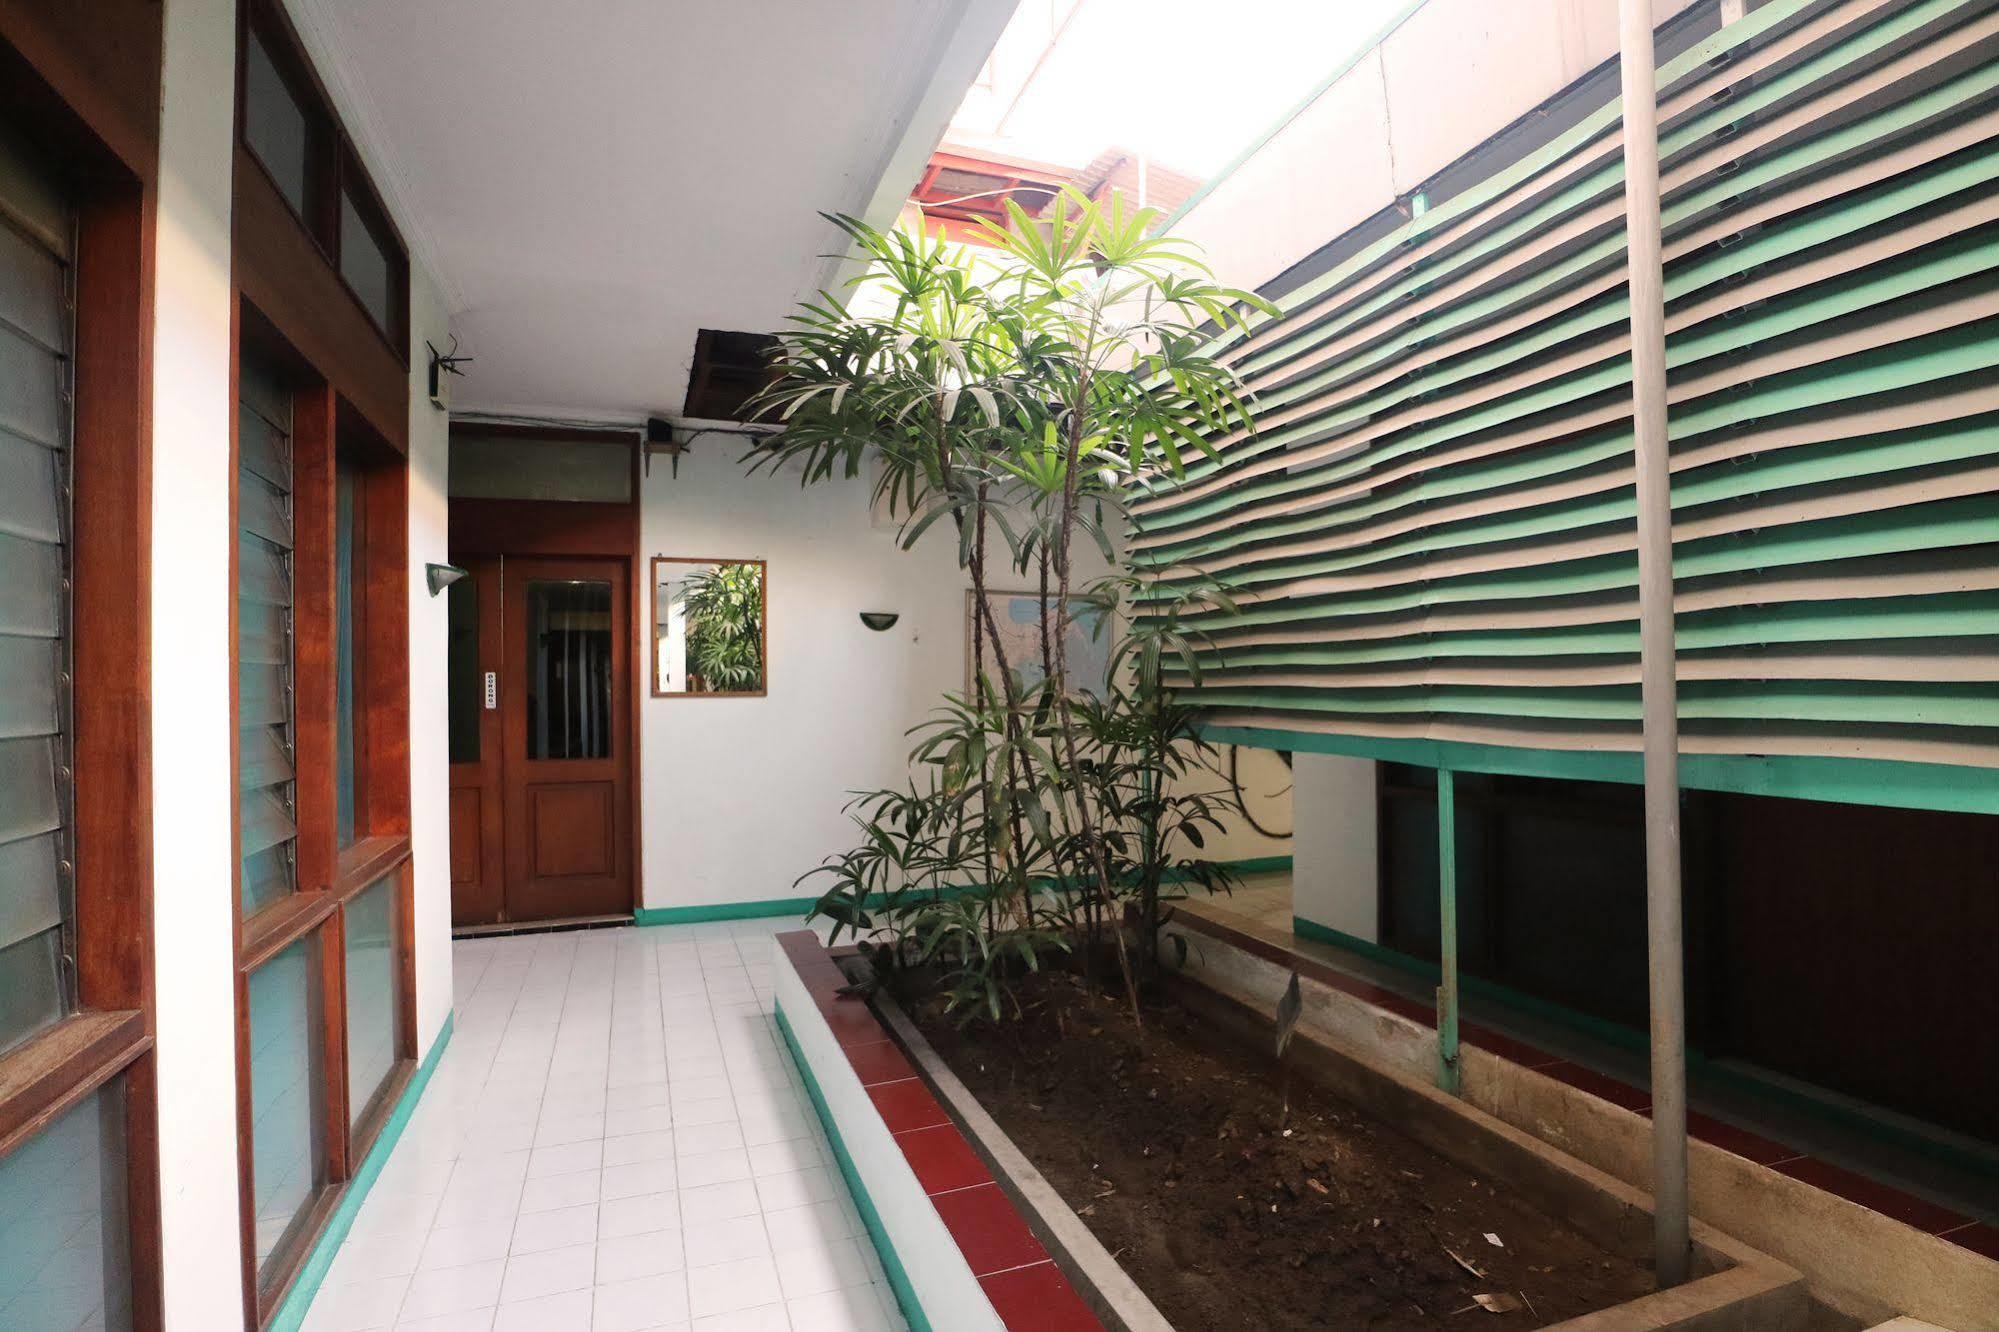 Hotel Kenongo Surabaya Esterno foto